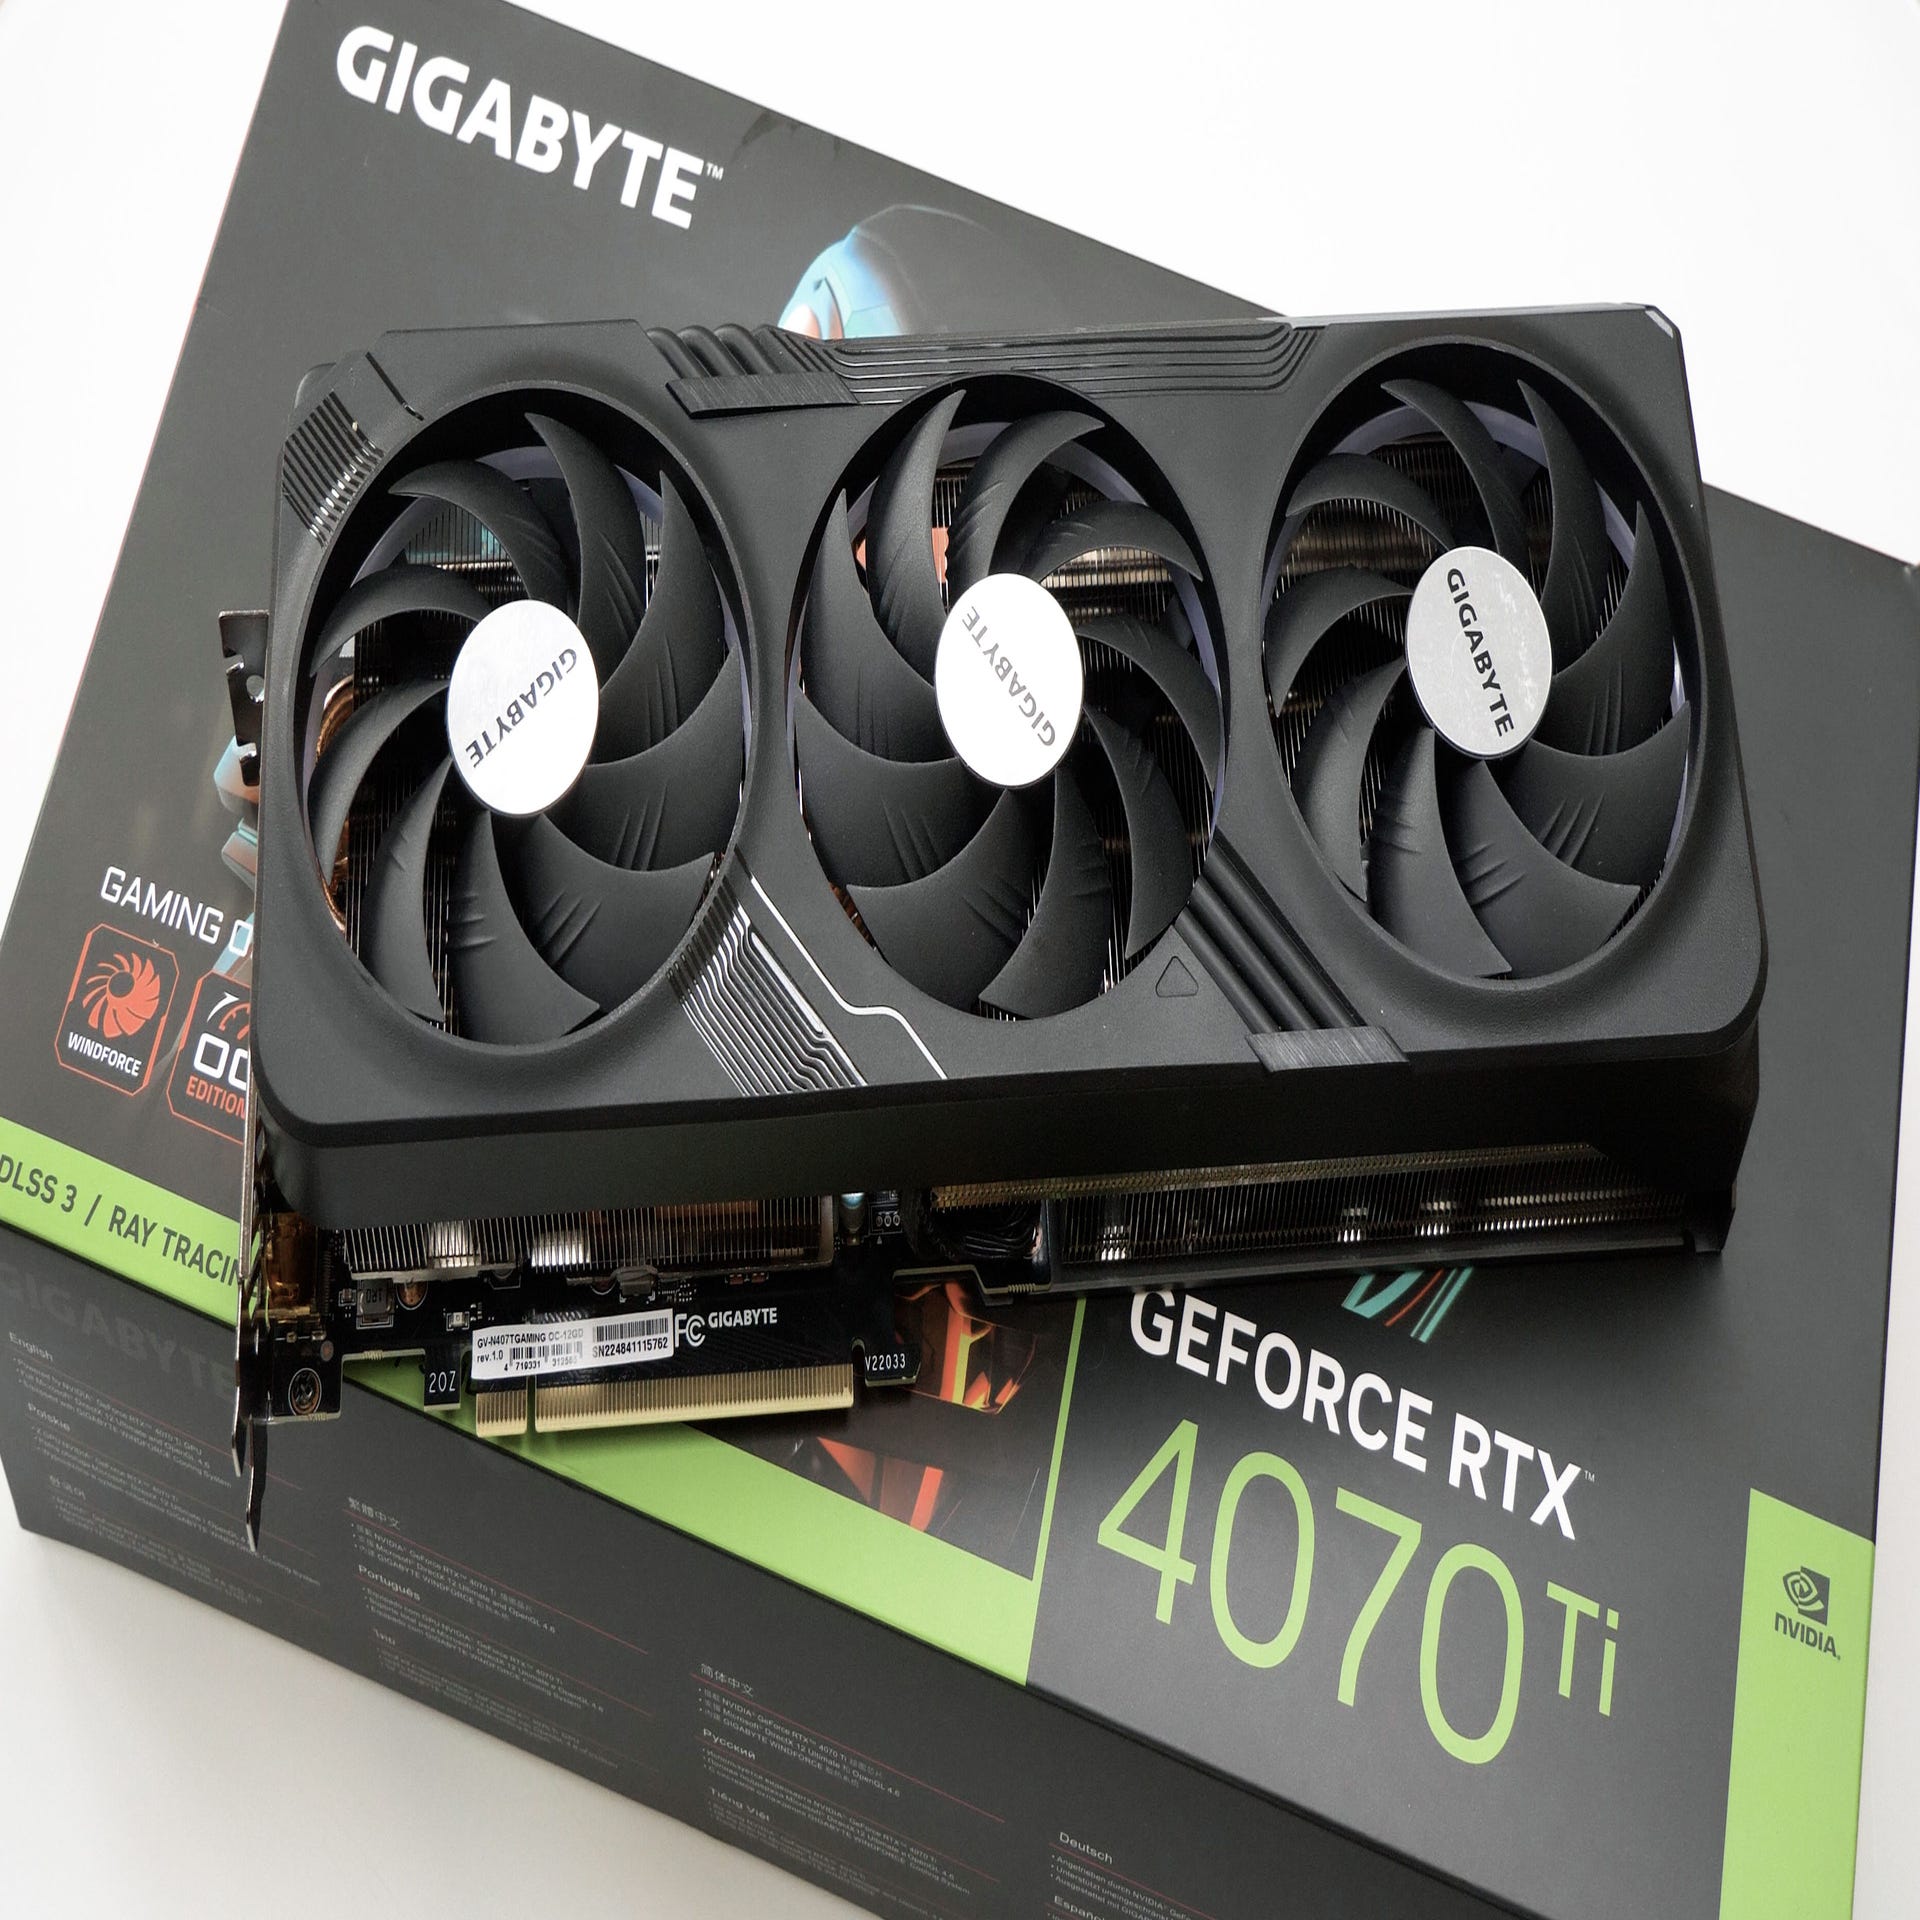 Nvidia GeForce 4070 Ti review: a next-gen GPU worth the asking price? | Eurogamer.net